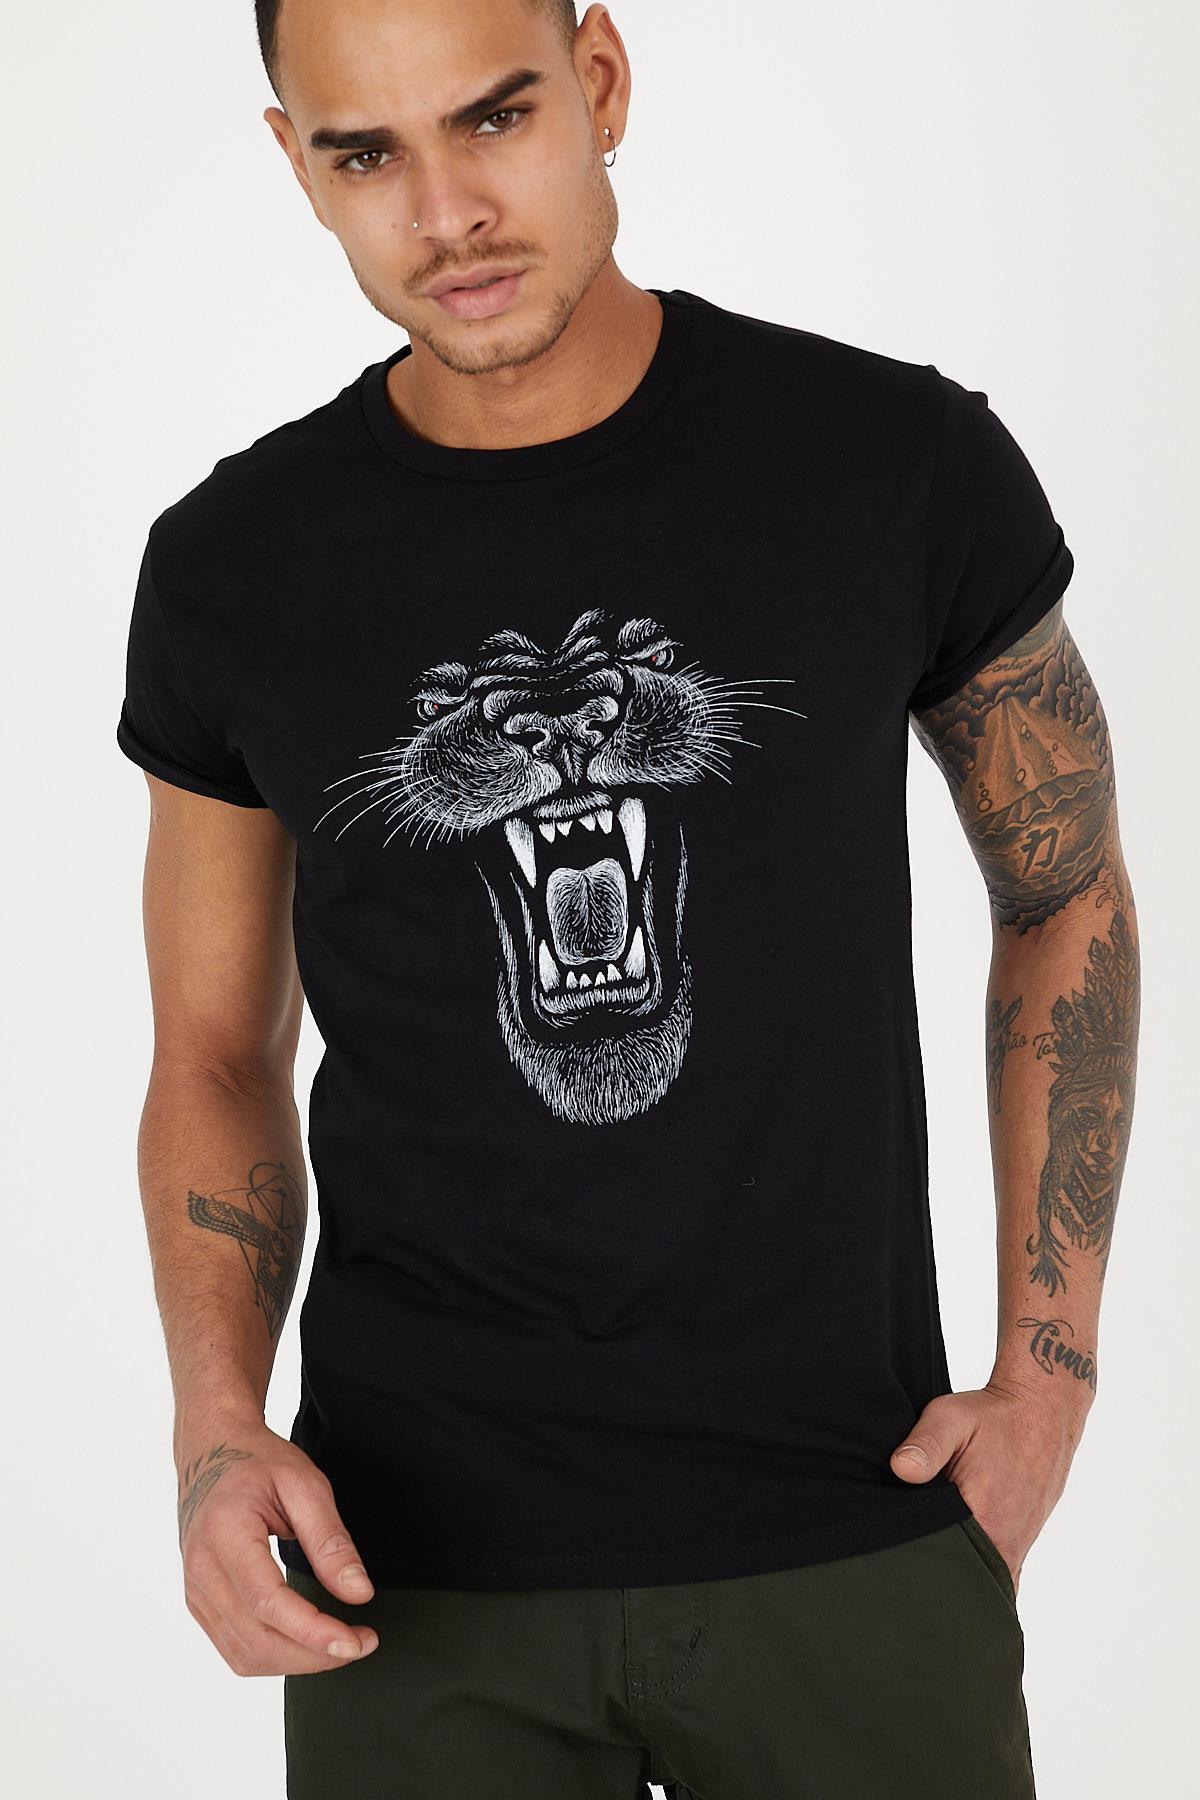 Black tiger printed Crew Neck men's t -shirt